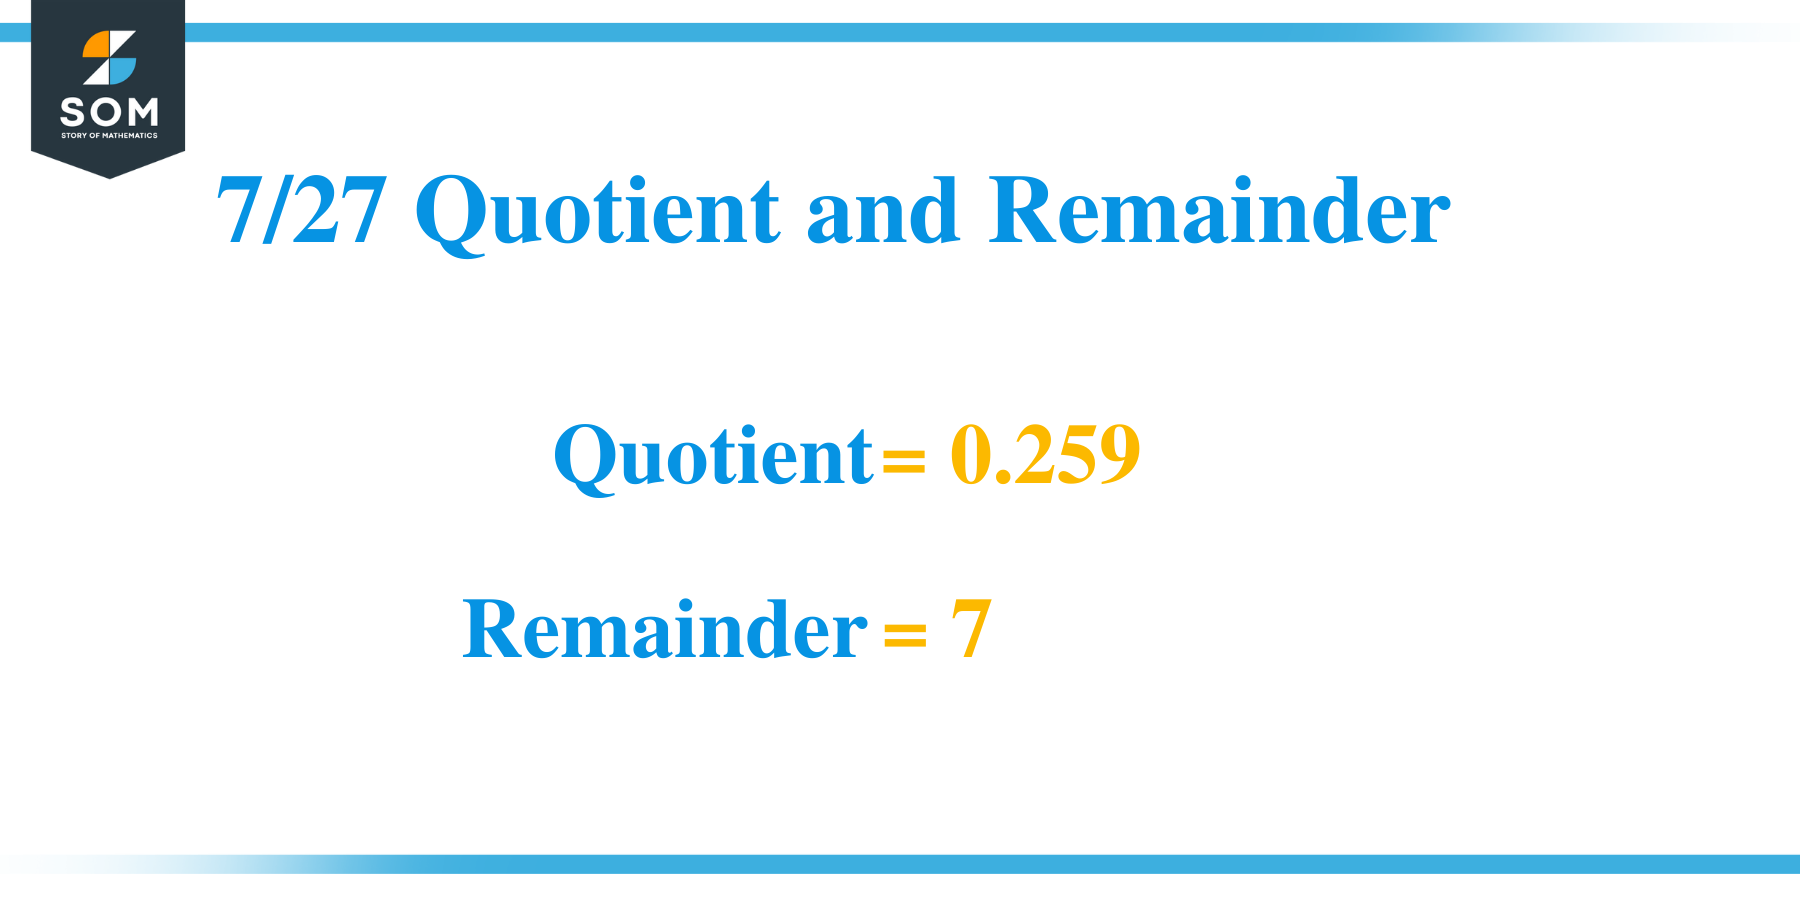 7_27 Quotient and Remainder